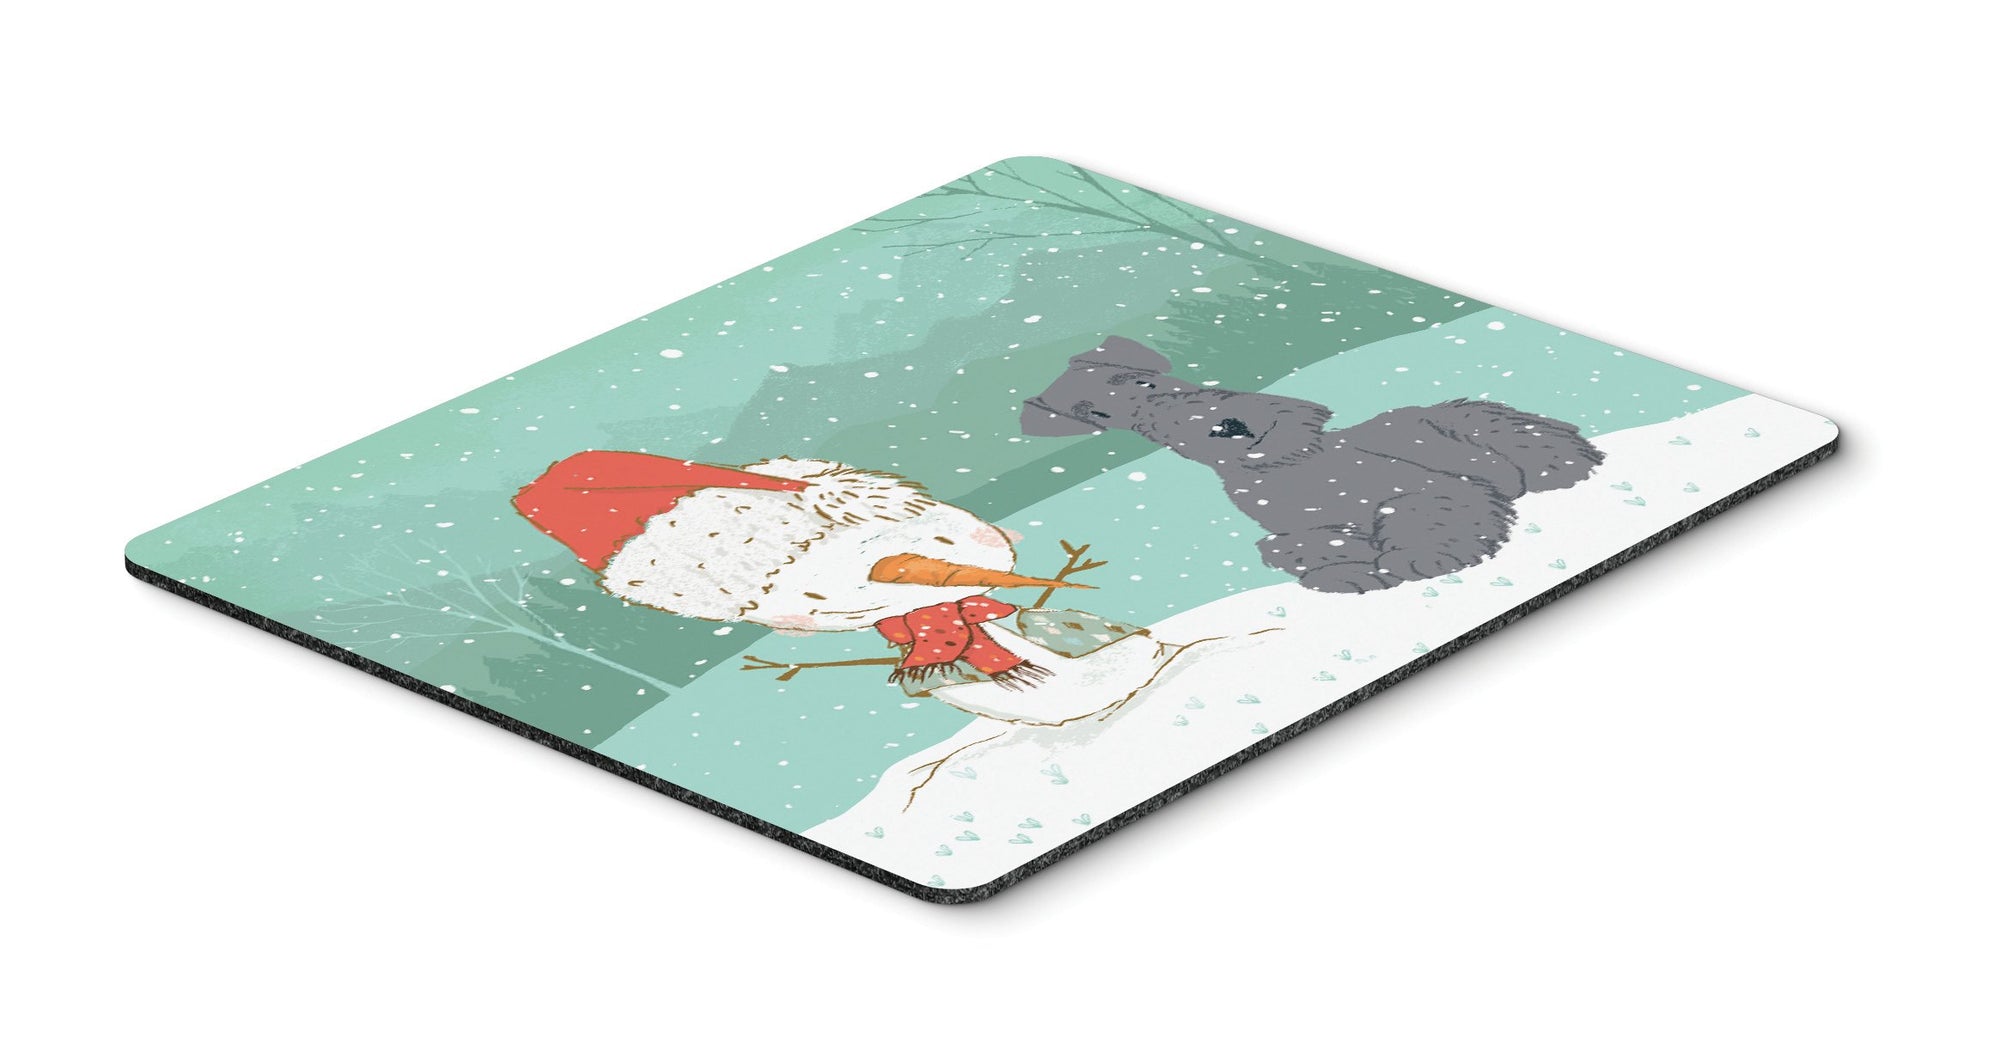 Lakeland Terrier Snowman Christmas Mouse Pad, Hot Pad or Trivet CK2077MP by Caroline's Treasures